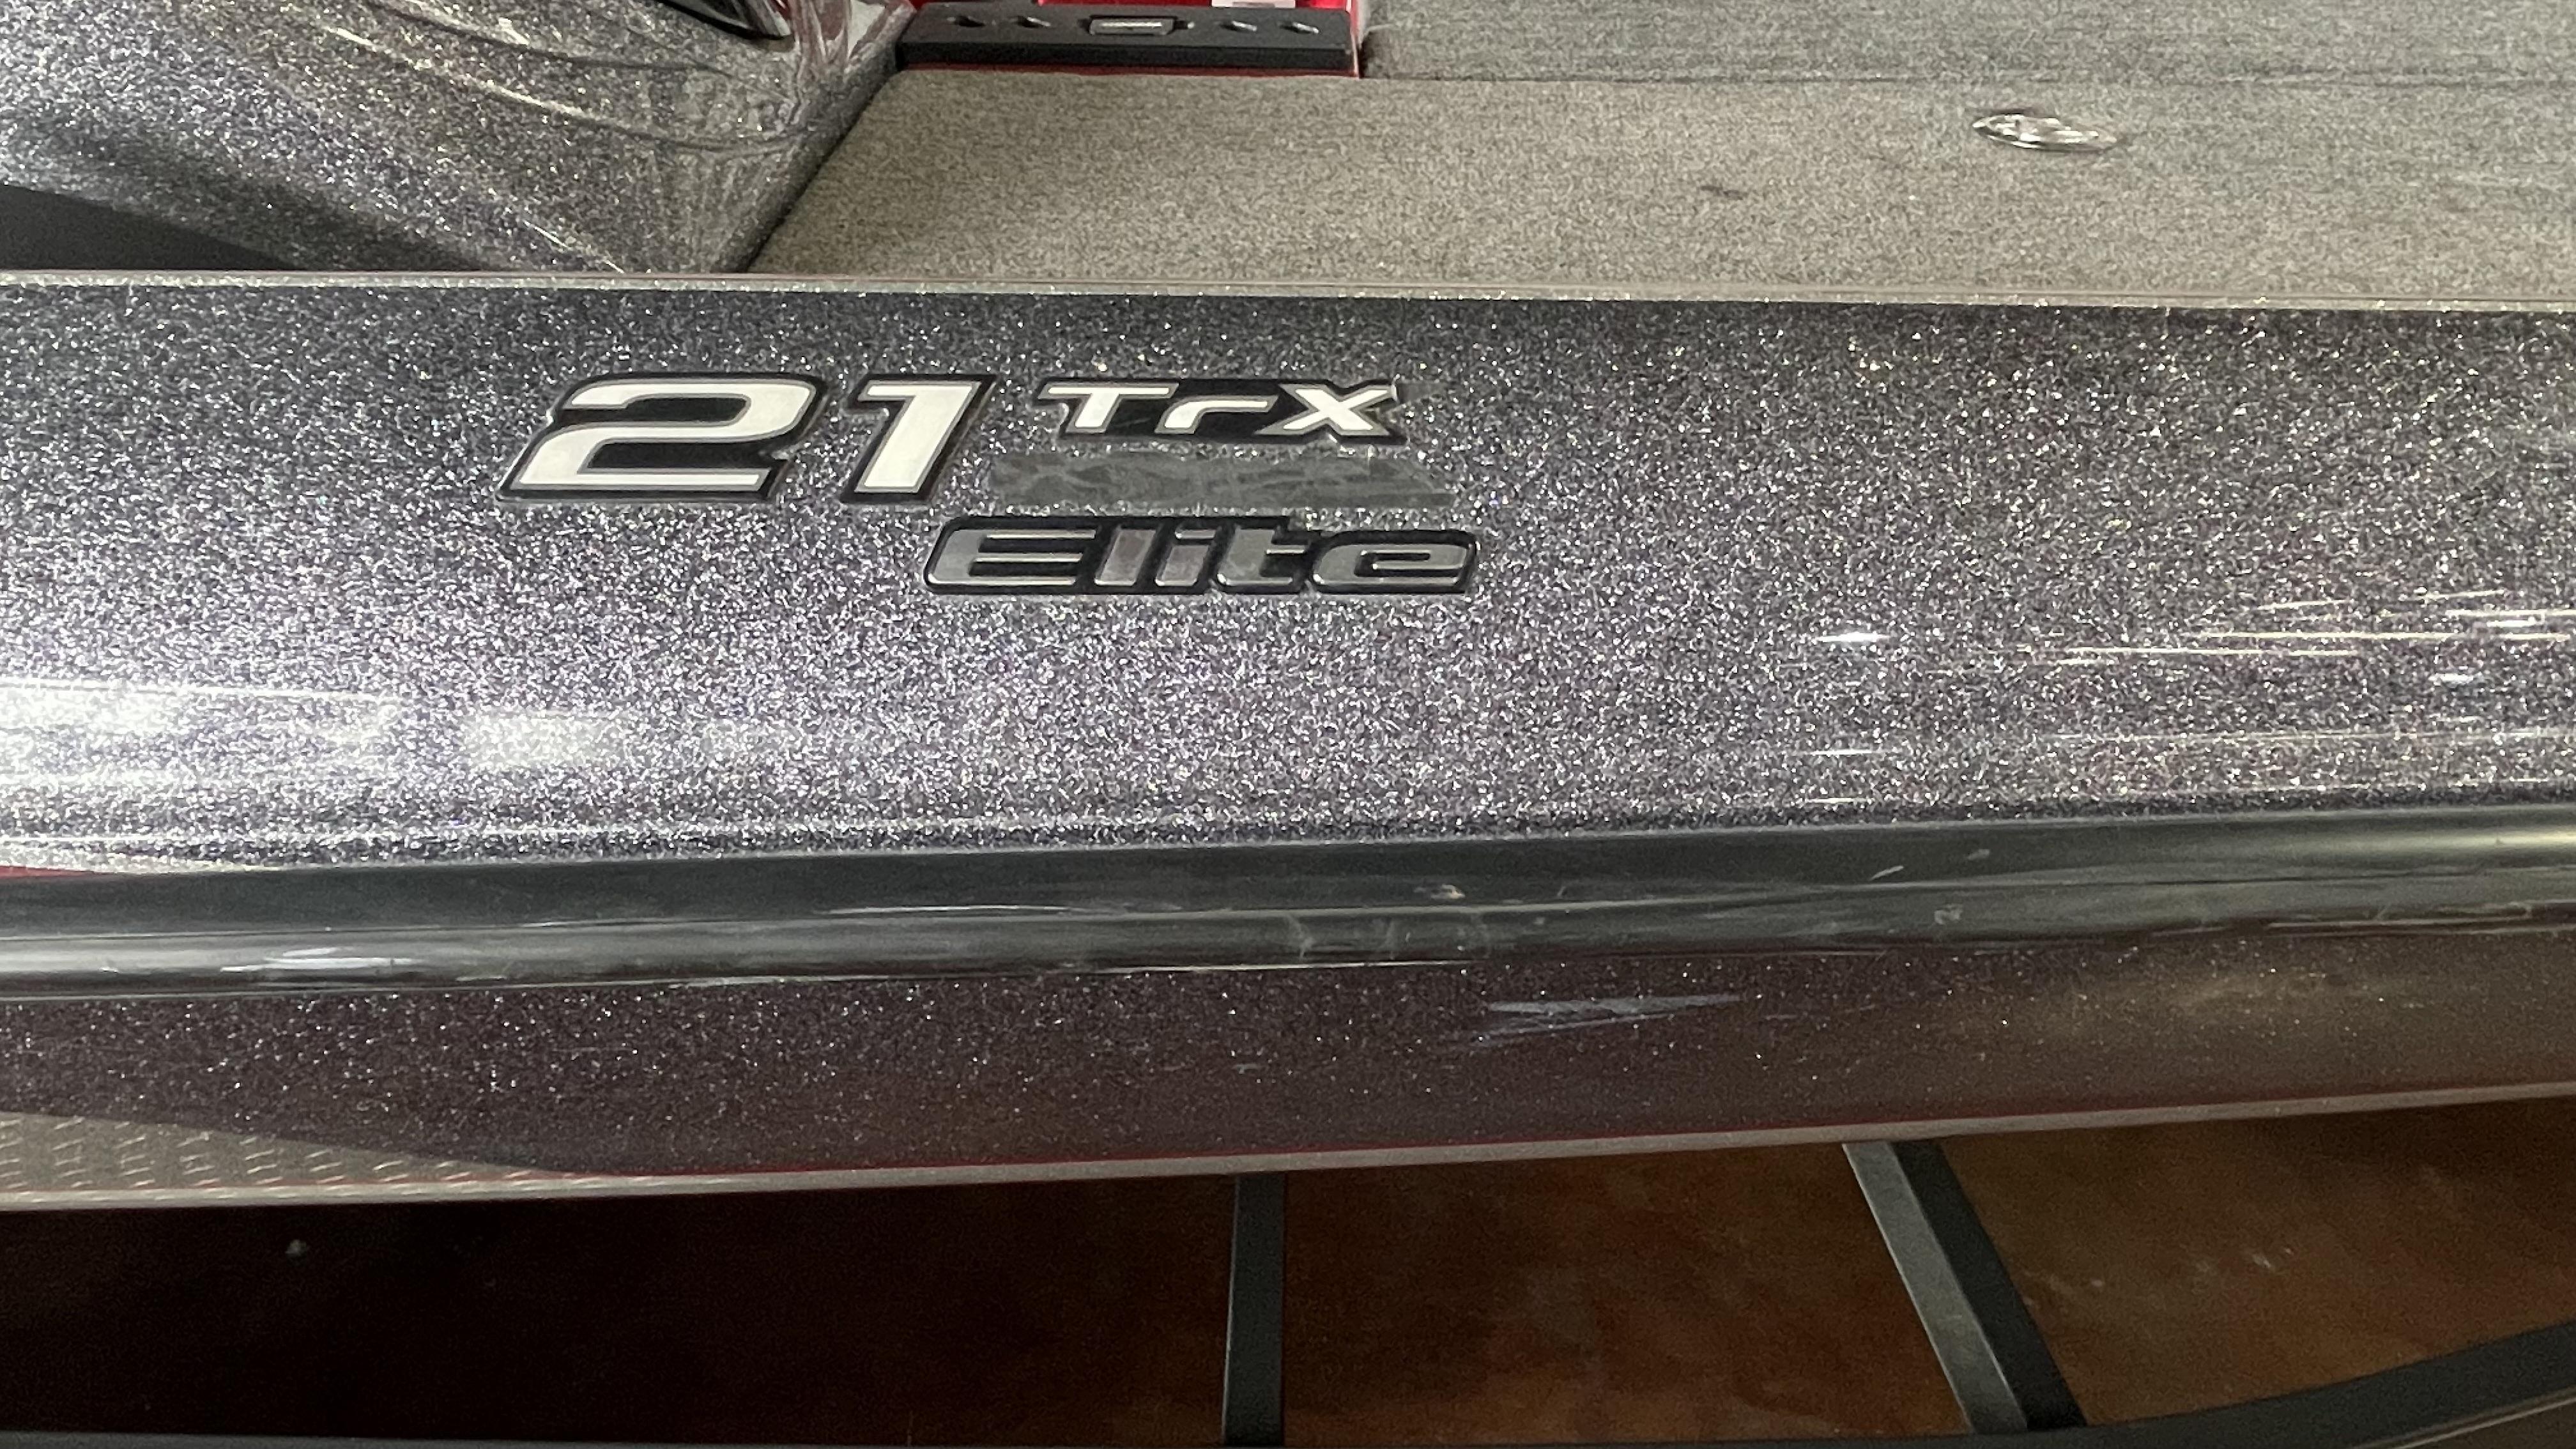 2017 Triton 21 TrX Elite